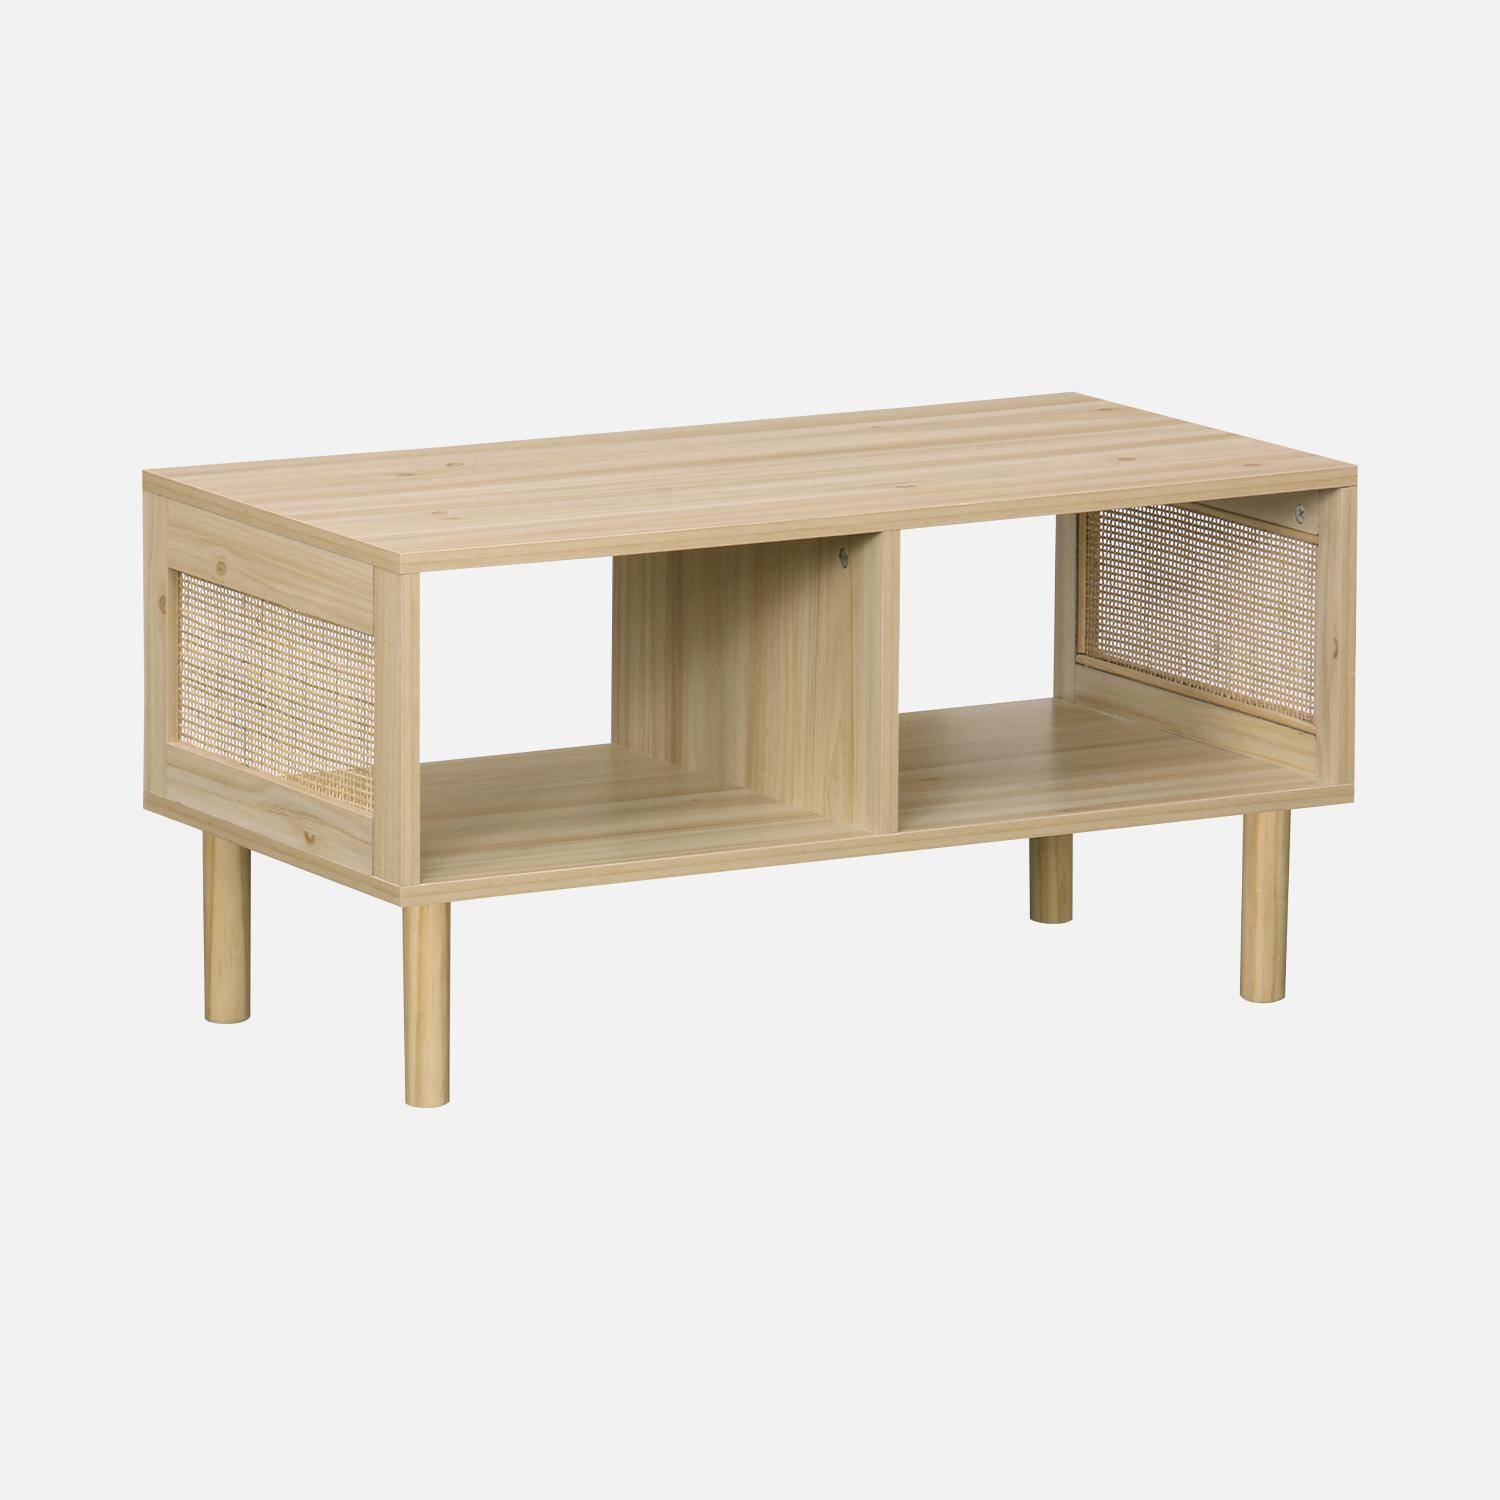 Woven rattan coffee table, 80x40x40cm, Camargue, Natural wood colour,sweeek,Photo3